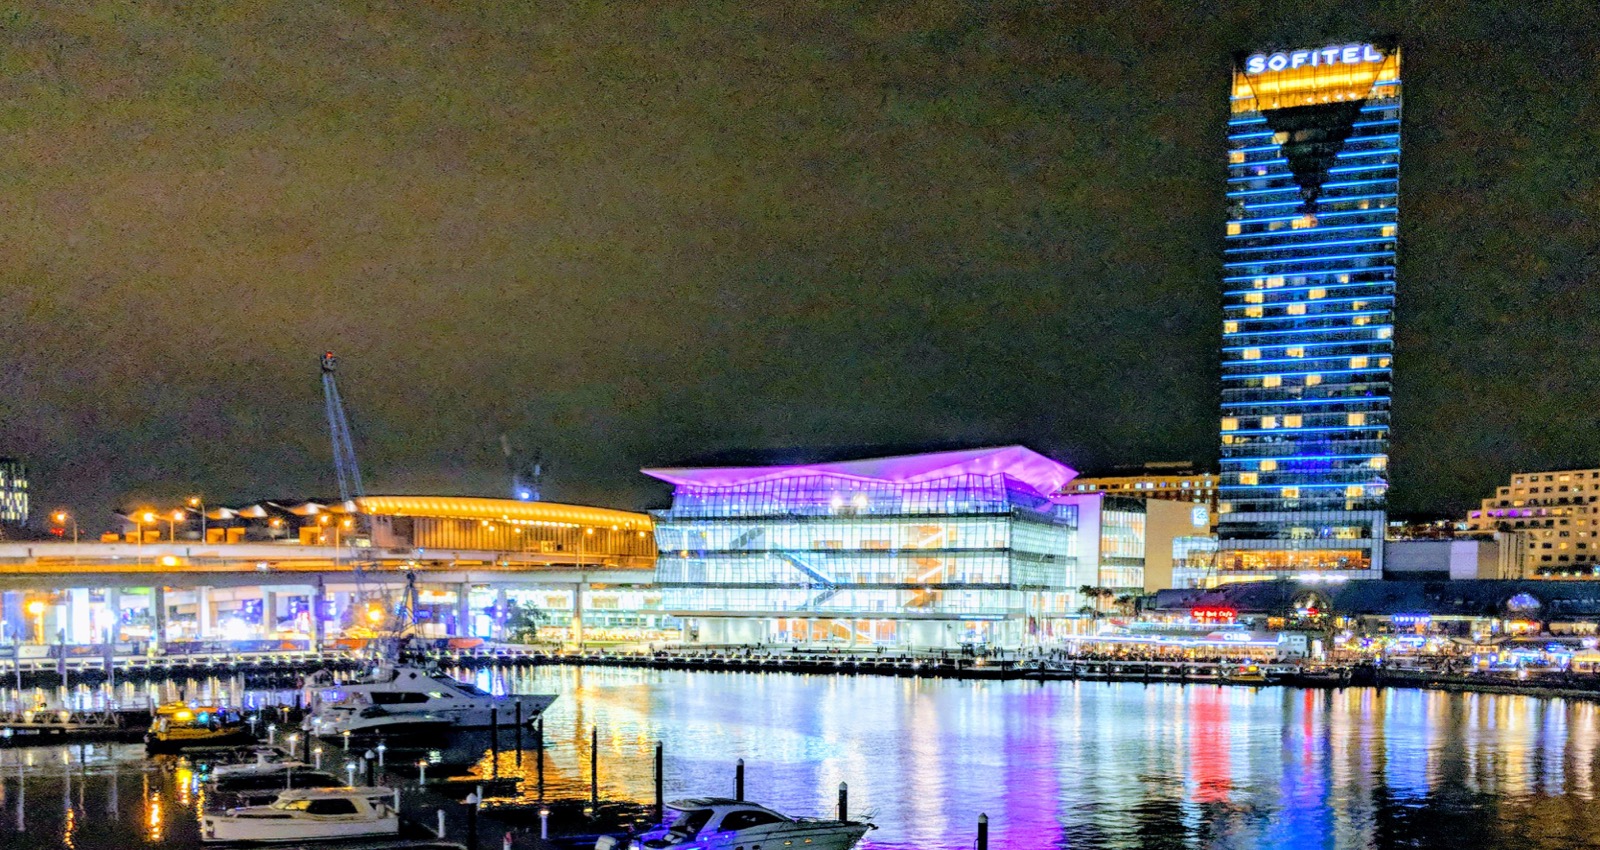 International Convention Centre, Sydney. 2018 Smart Energy Conference